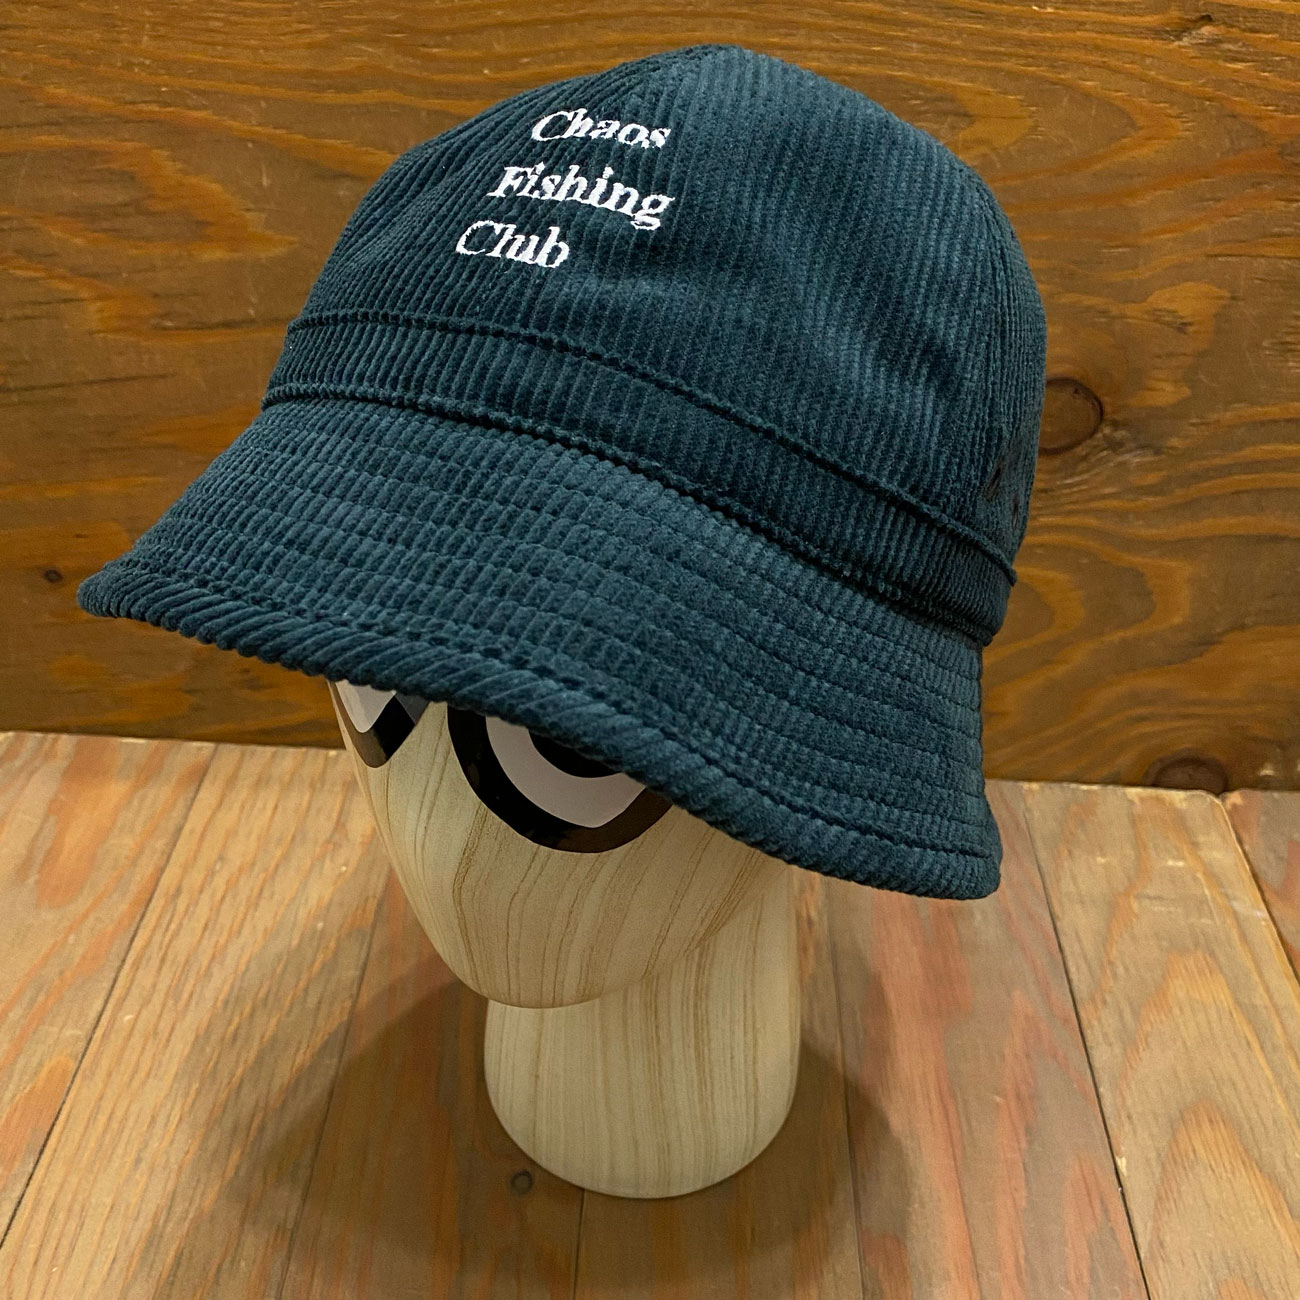 Chaos Fishing Club Bucket hat